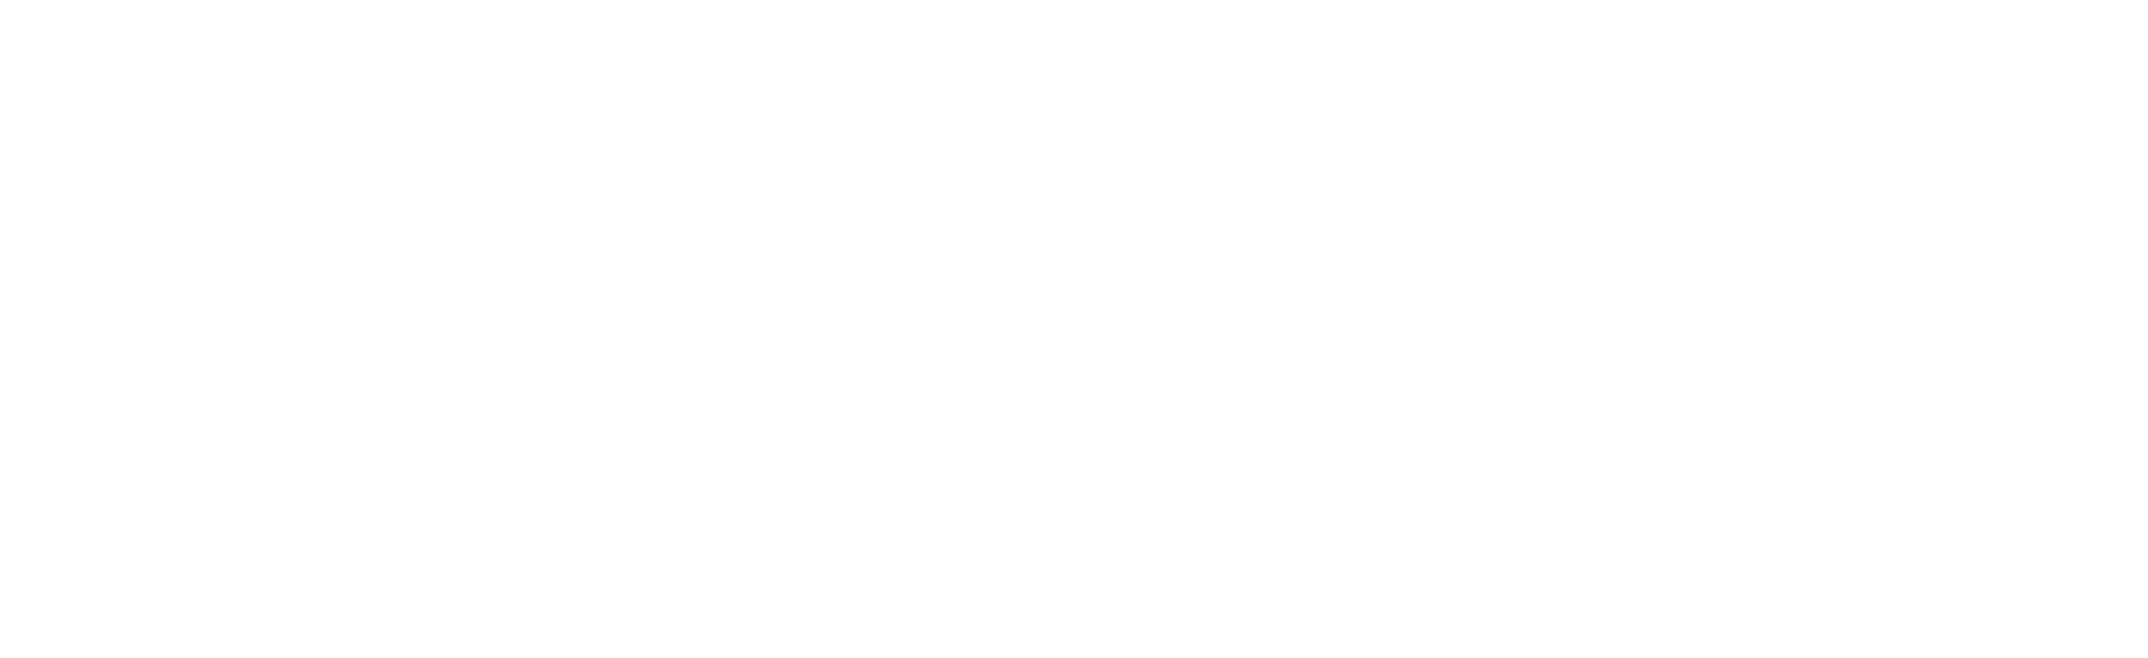 dmx rf wristband signal sender